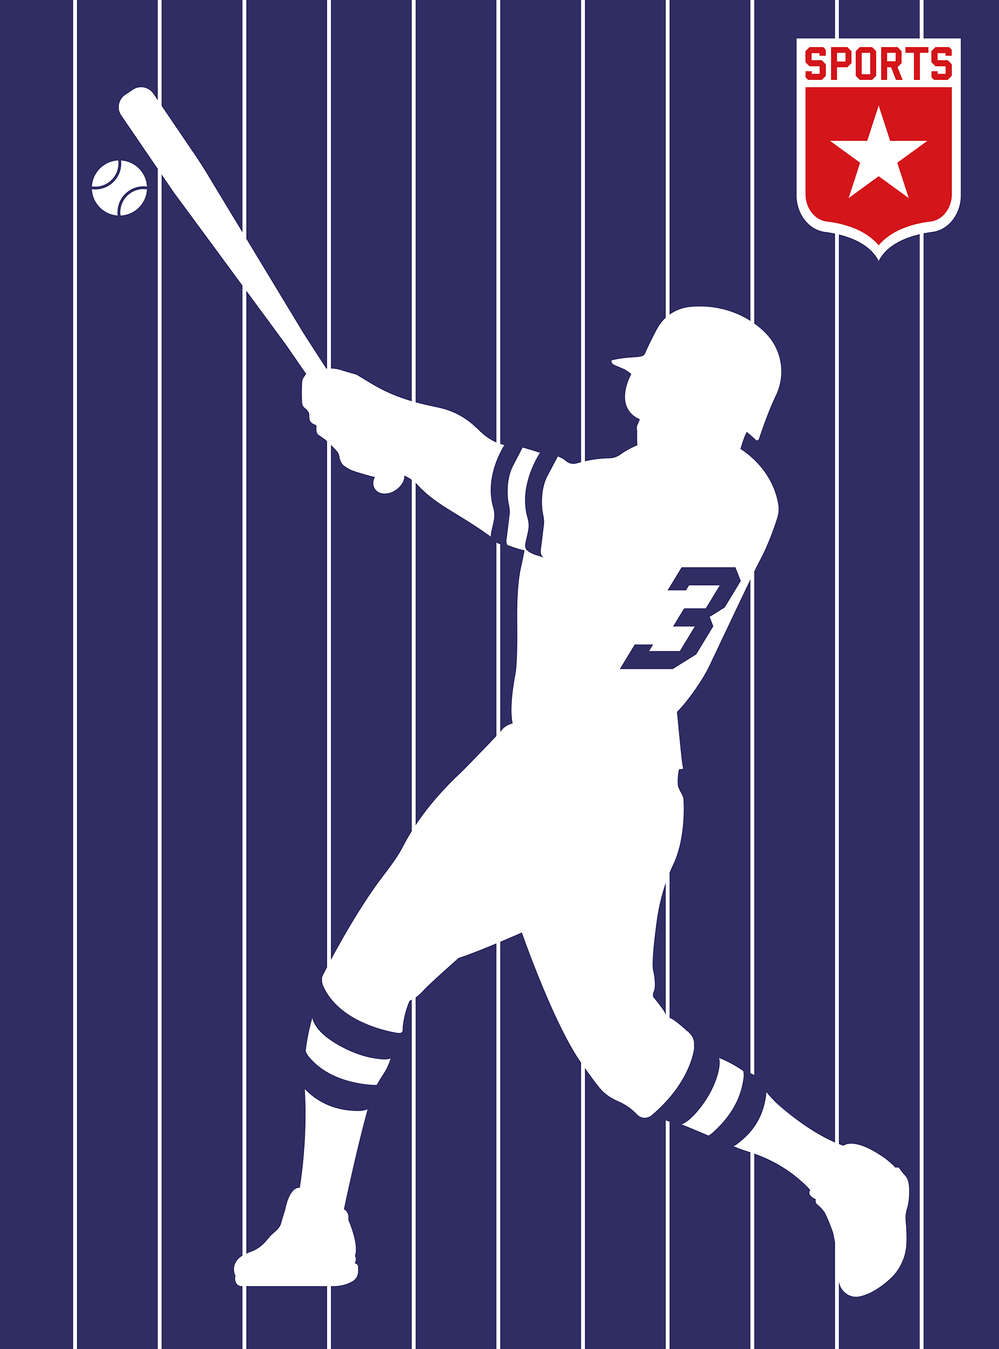             Muurschildering Sport Baseball Motief Speler Pictogram
        